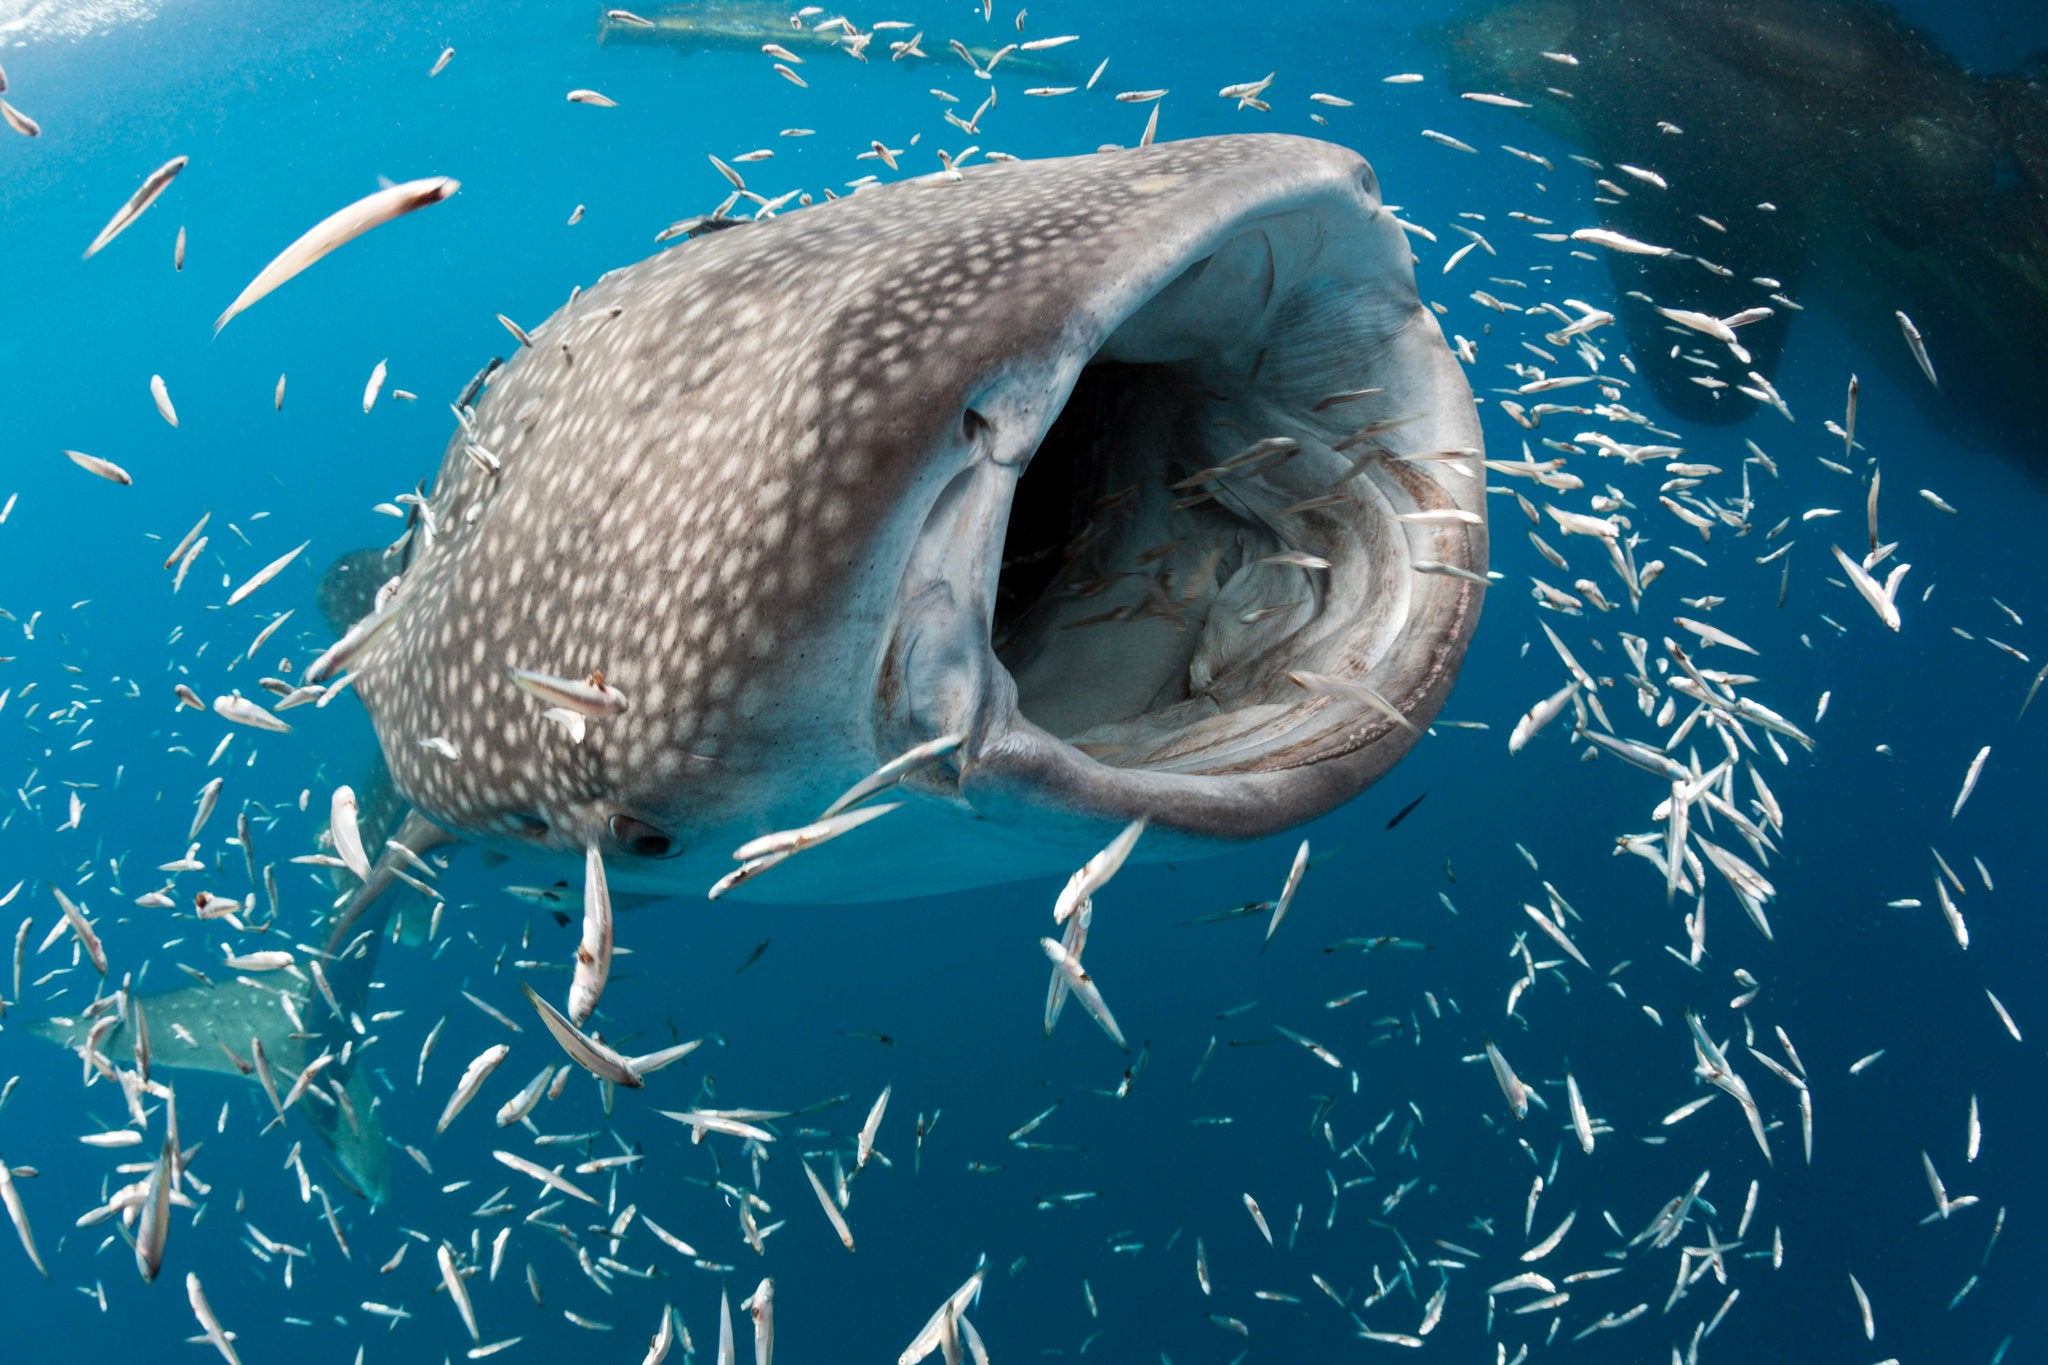 Biggest fish existing in the ocean